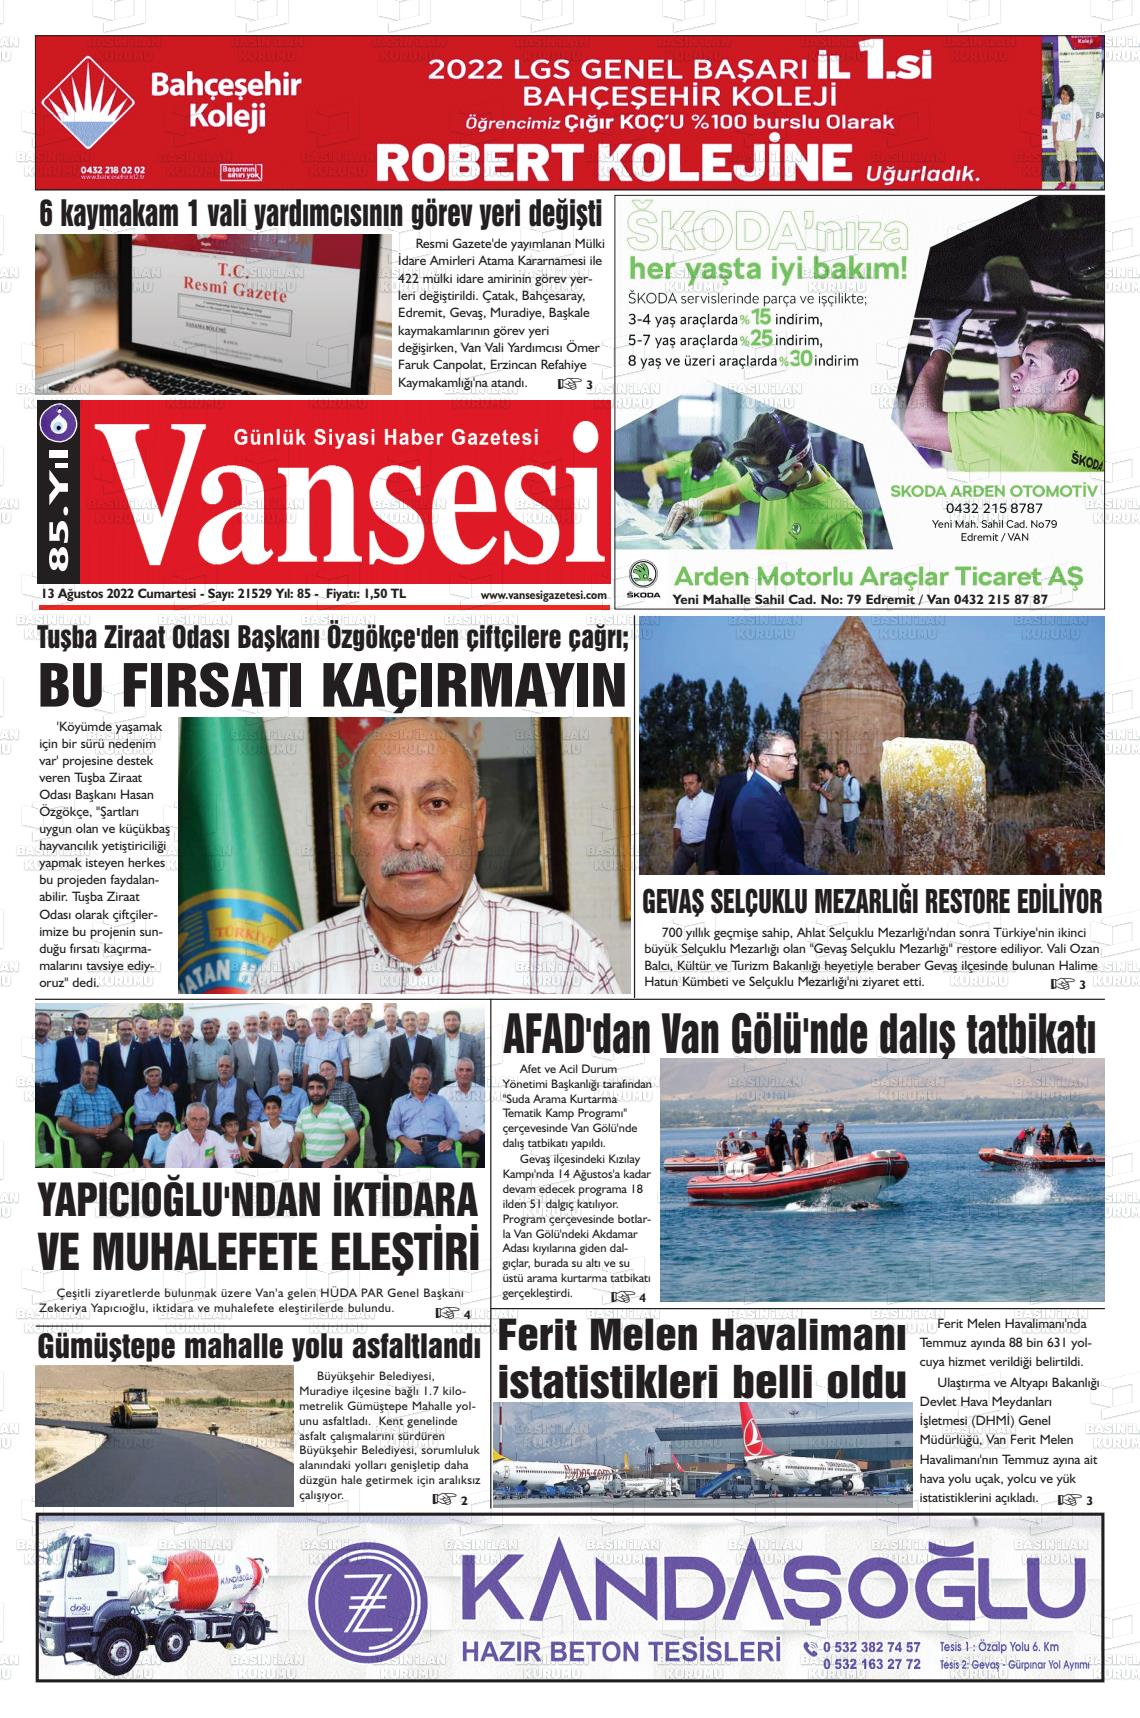 13 Ağustos 2022 Vansesi Gazete Manşeti